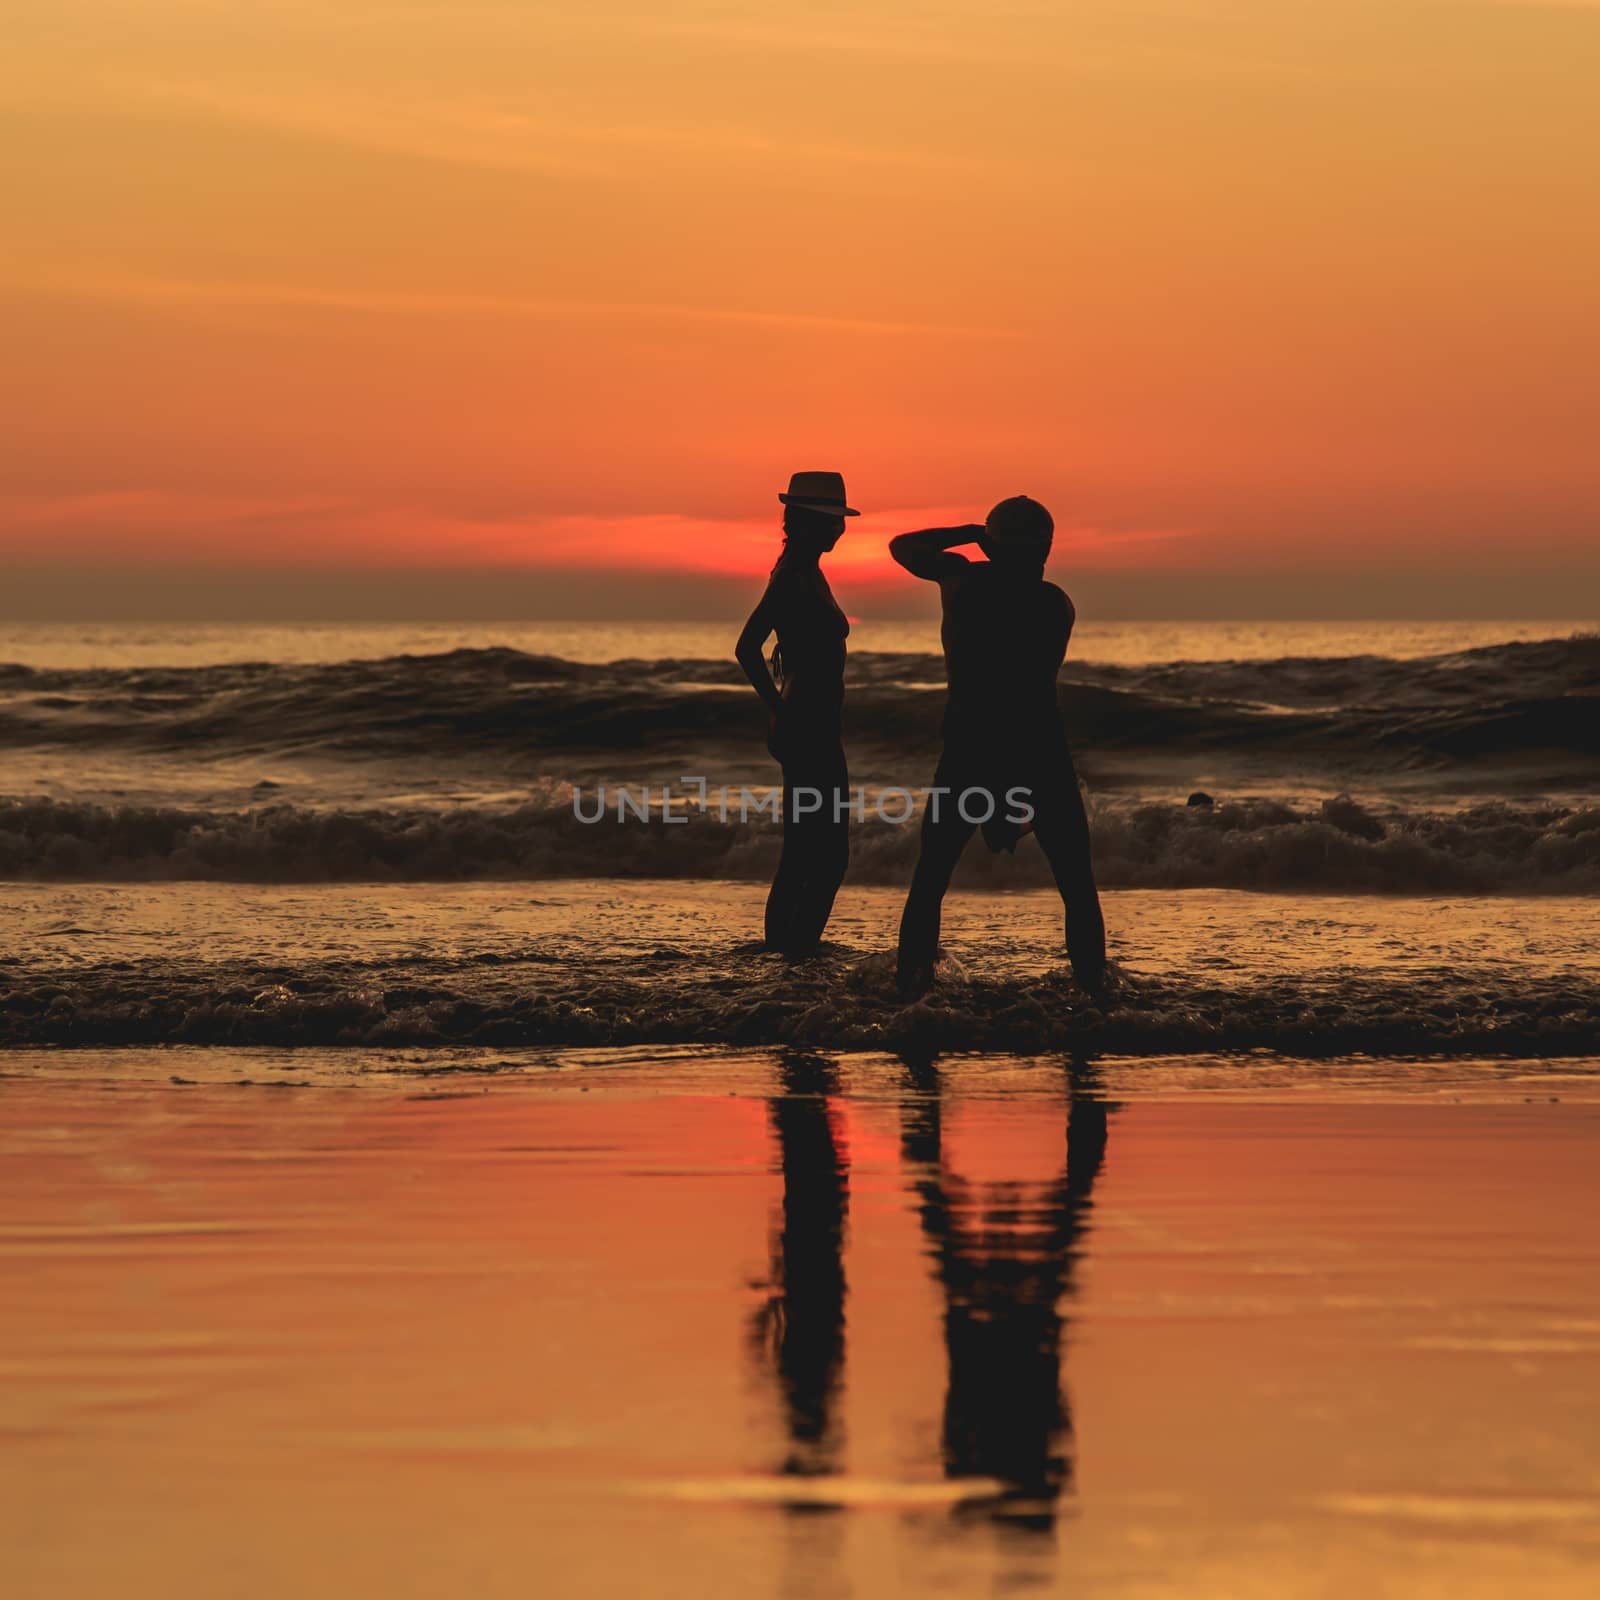 Silhouette of tourist at sunset beach in Phuket Thailand